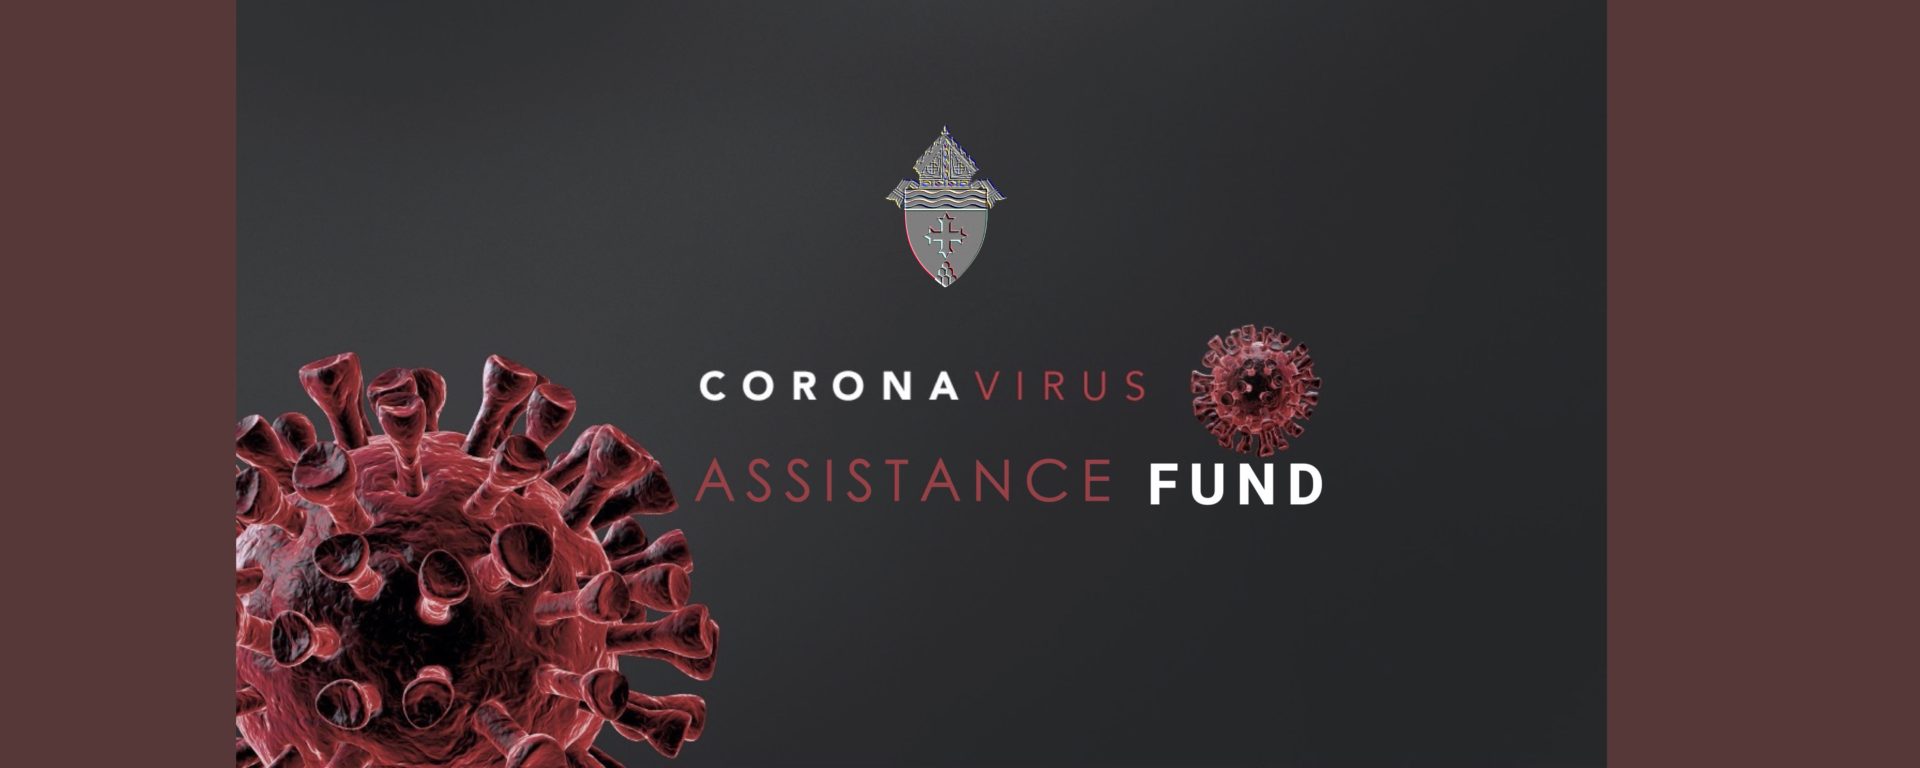 coronavirus assistance fund